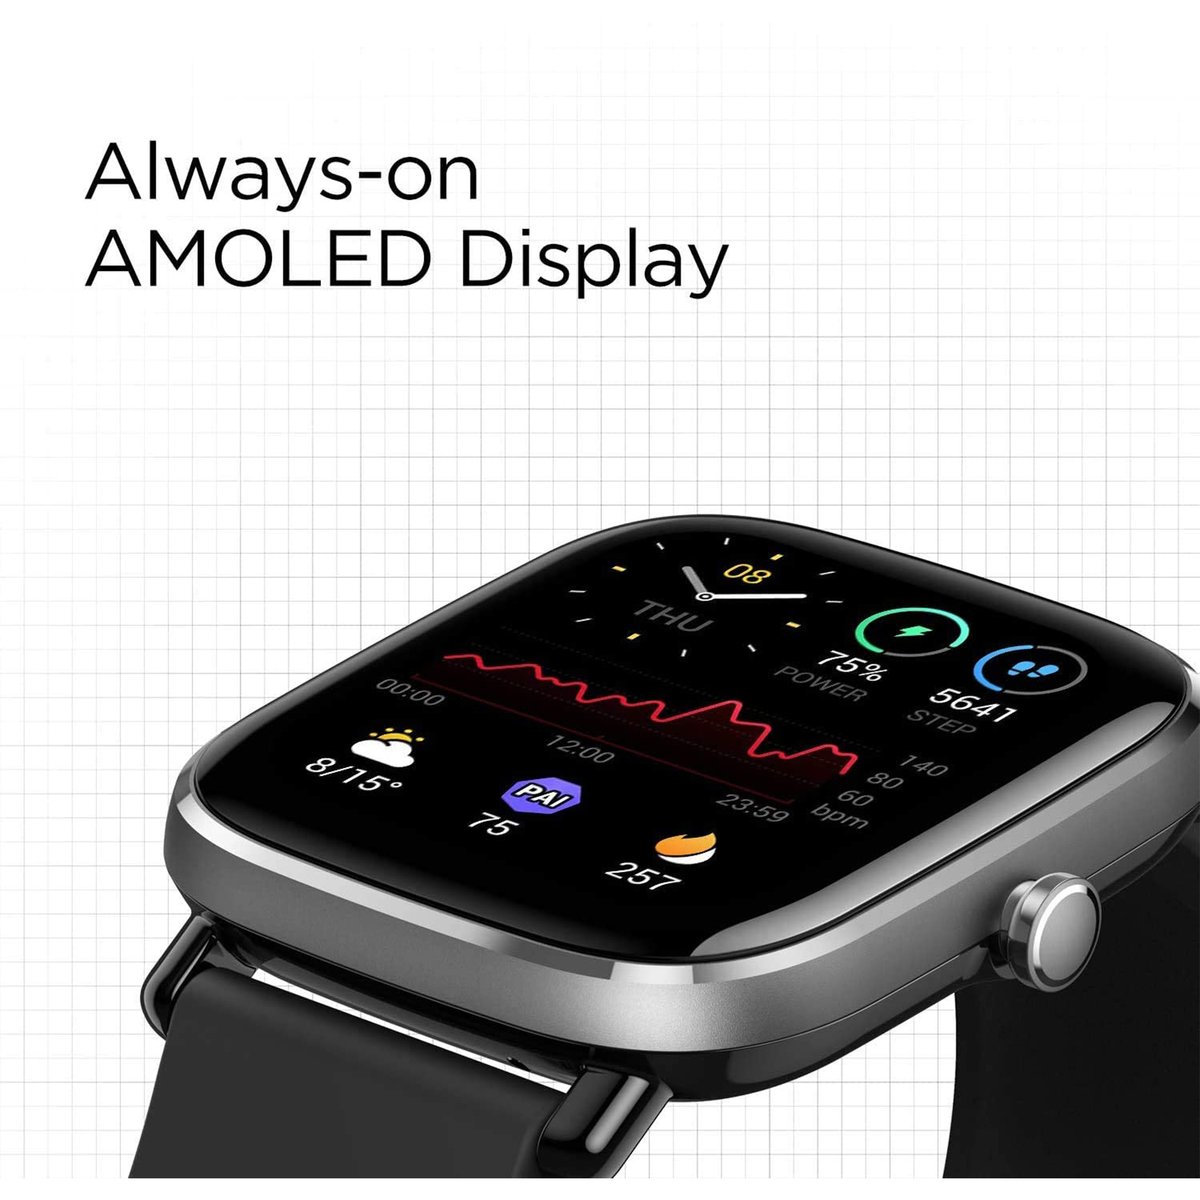 Amazfit GTS 2 Mini Fitness Smart Watch, Super-Light Thin Design, SpO2 Level Measurement, 14-Days Battery Life, 70+ Sports Modes, Heart Rate, Sleep, Stress Level Monitoring, Black